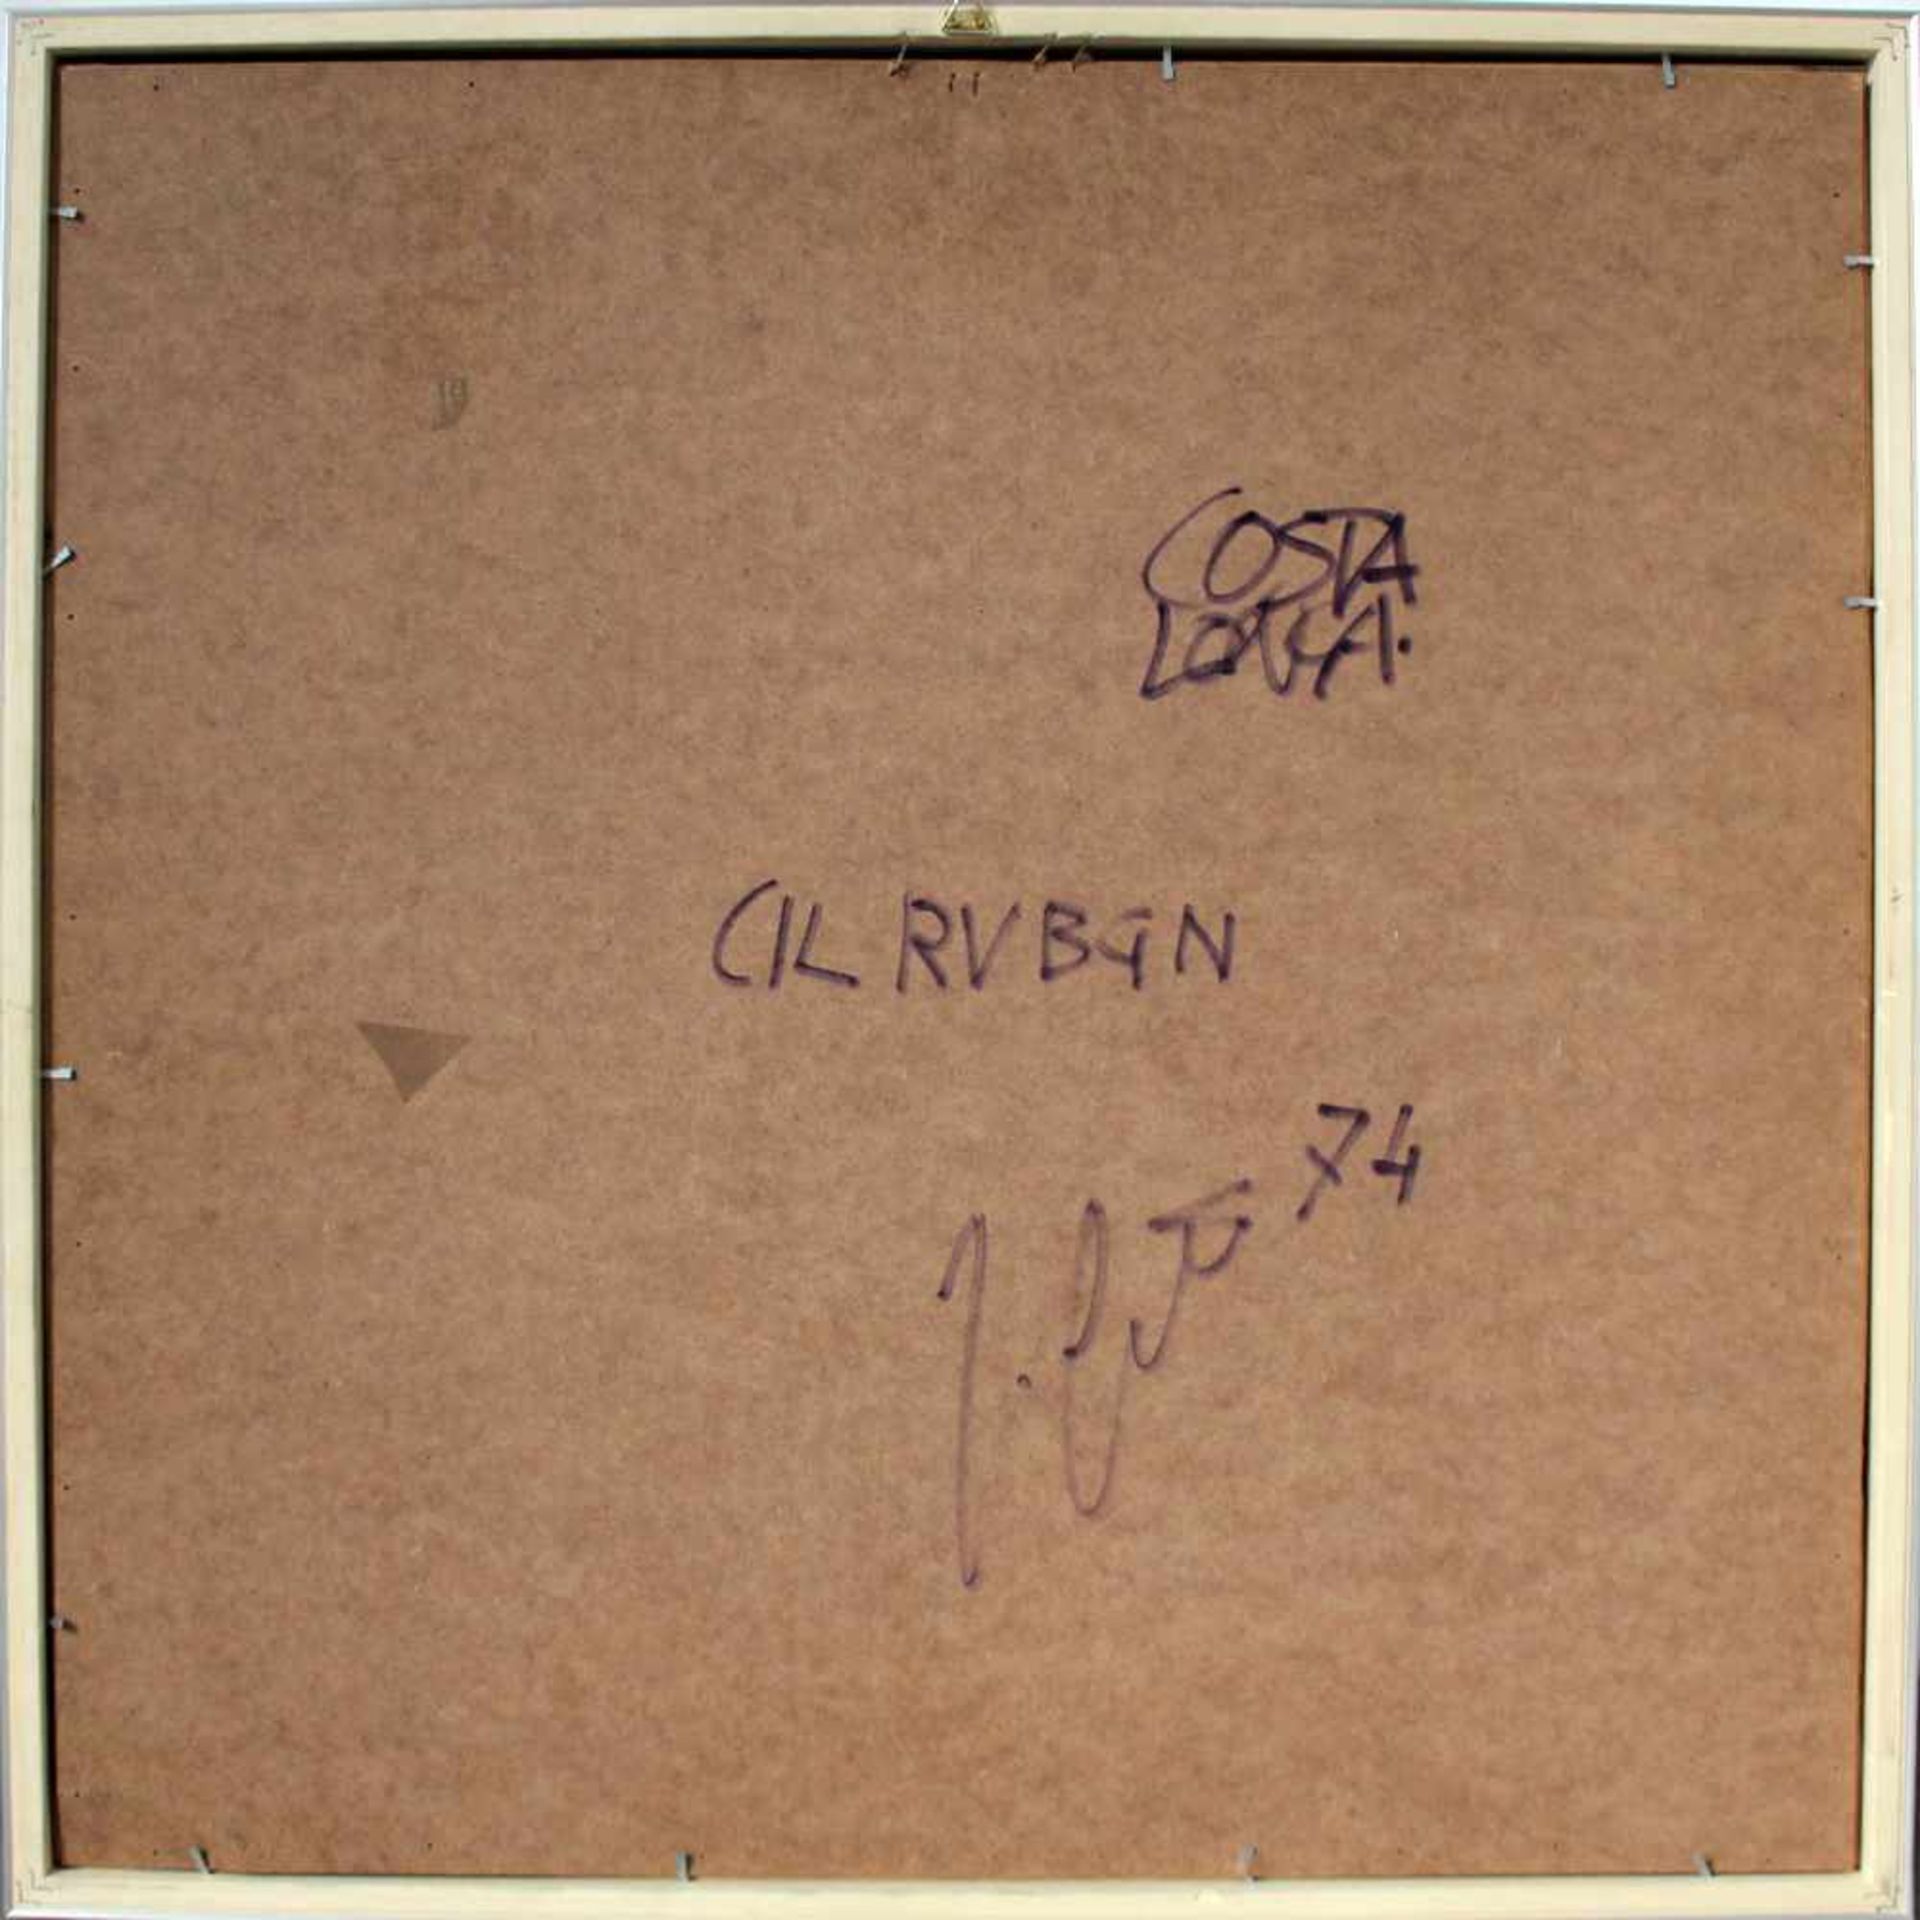 Franco Costlonga(geb. 1933)"CILRVBGN"1974Acryl, Holz, MDF, Plexiglas; signiert und - Bild 3 aus 3